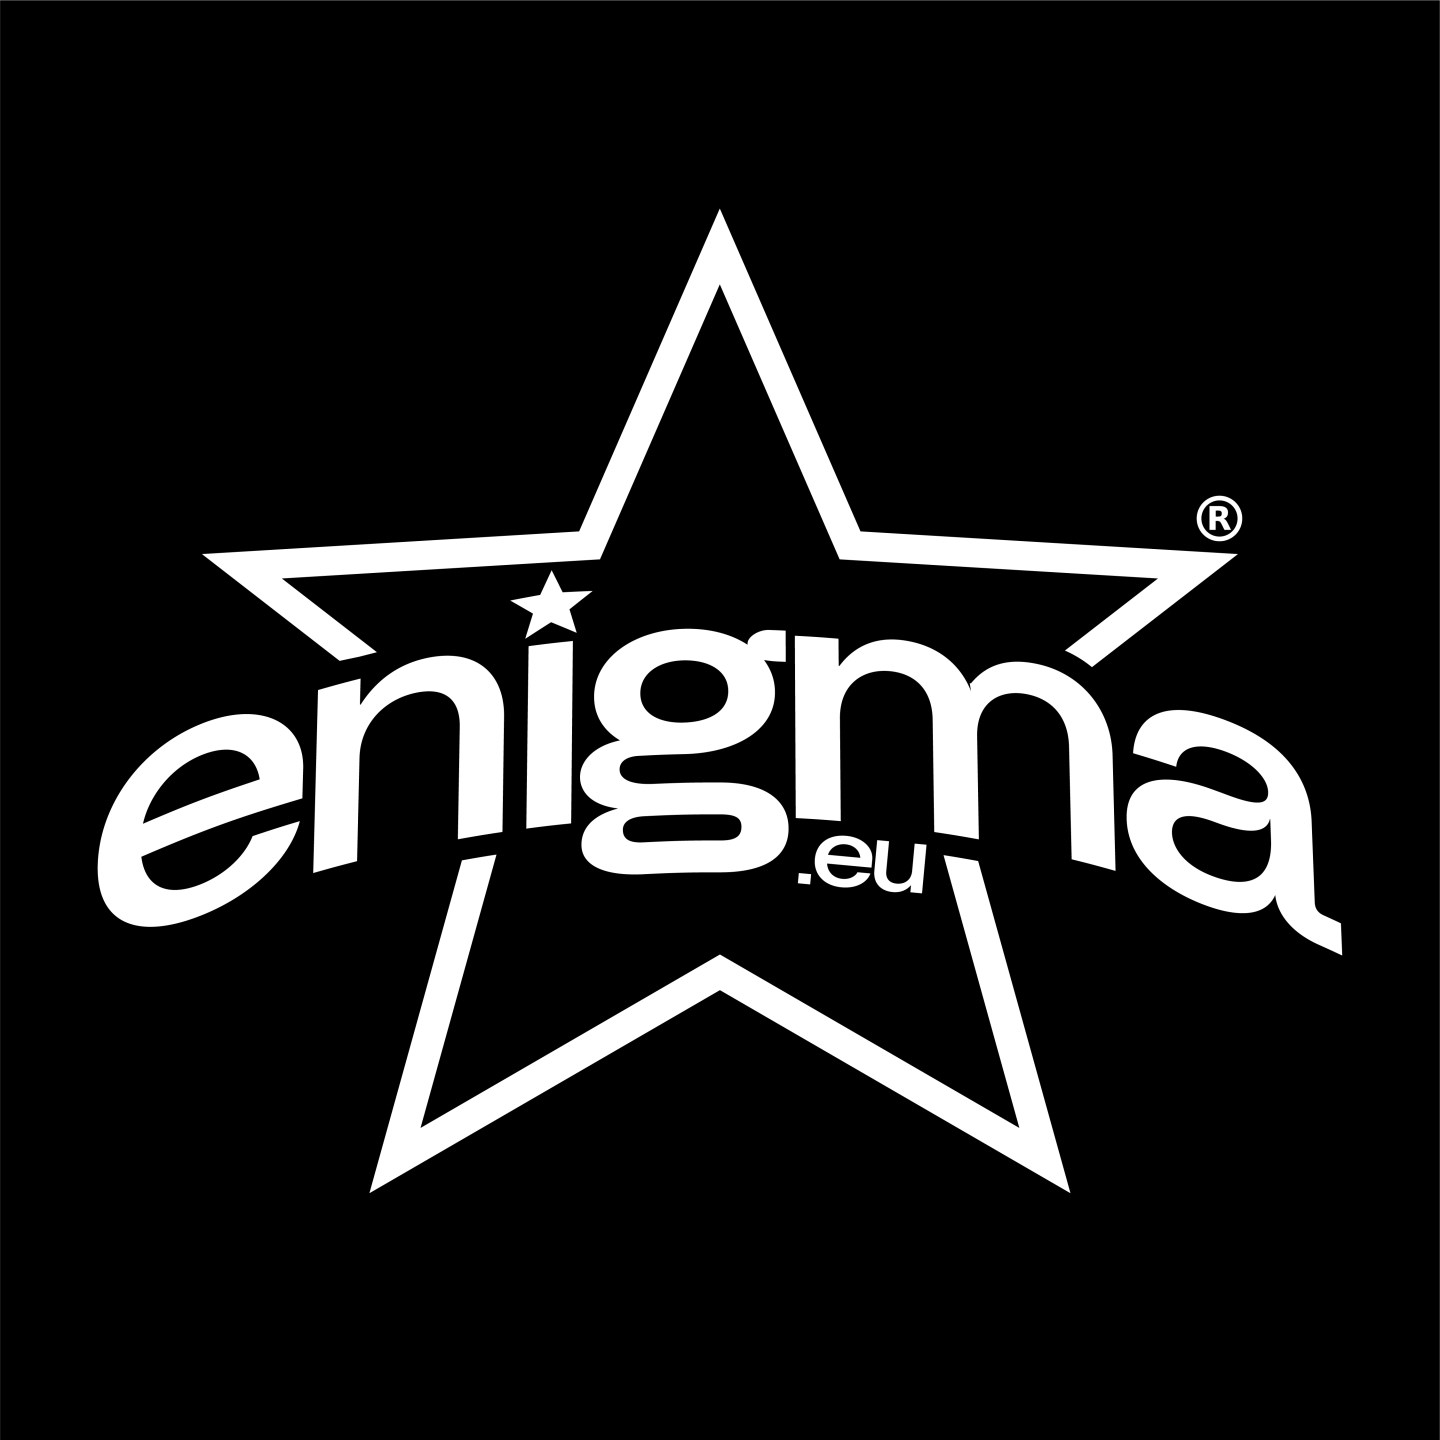 ENIGMA.EU · Upcoming Events, Tickets & News